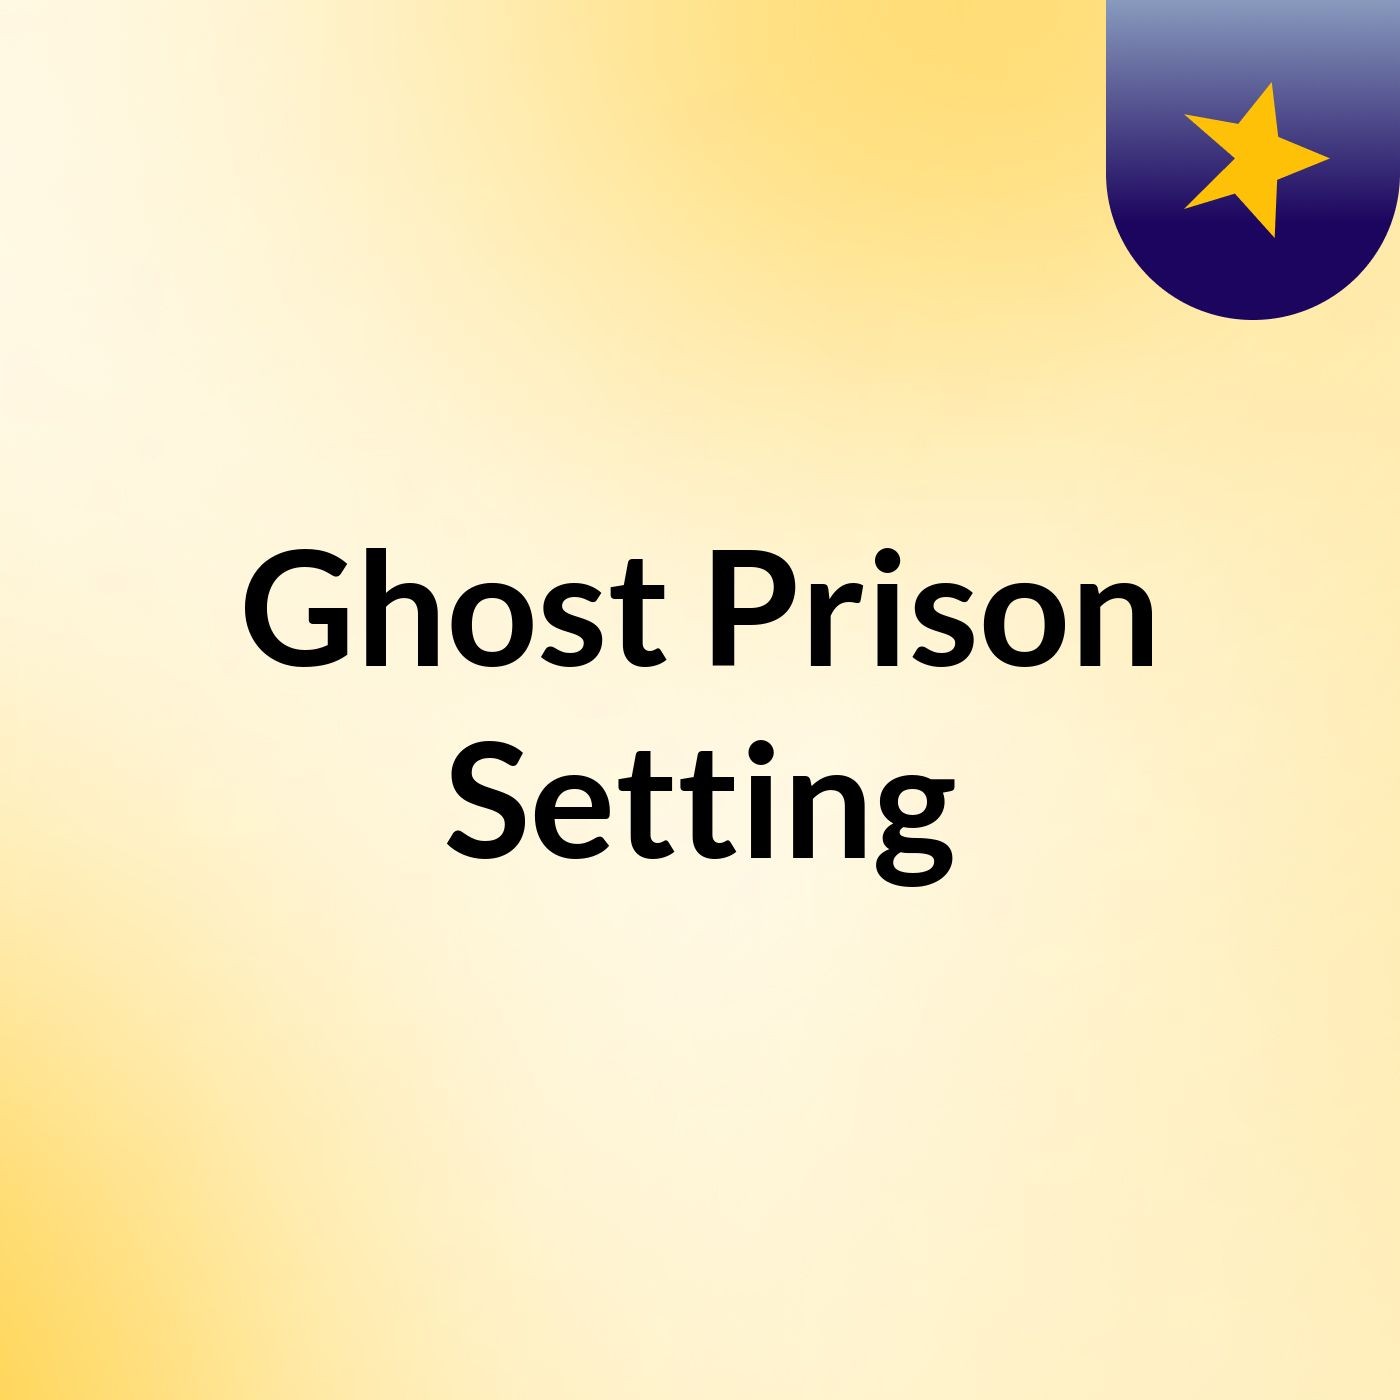 Ghost Prison Setting